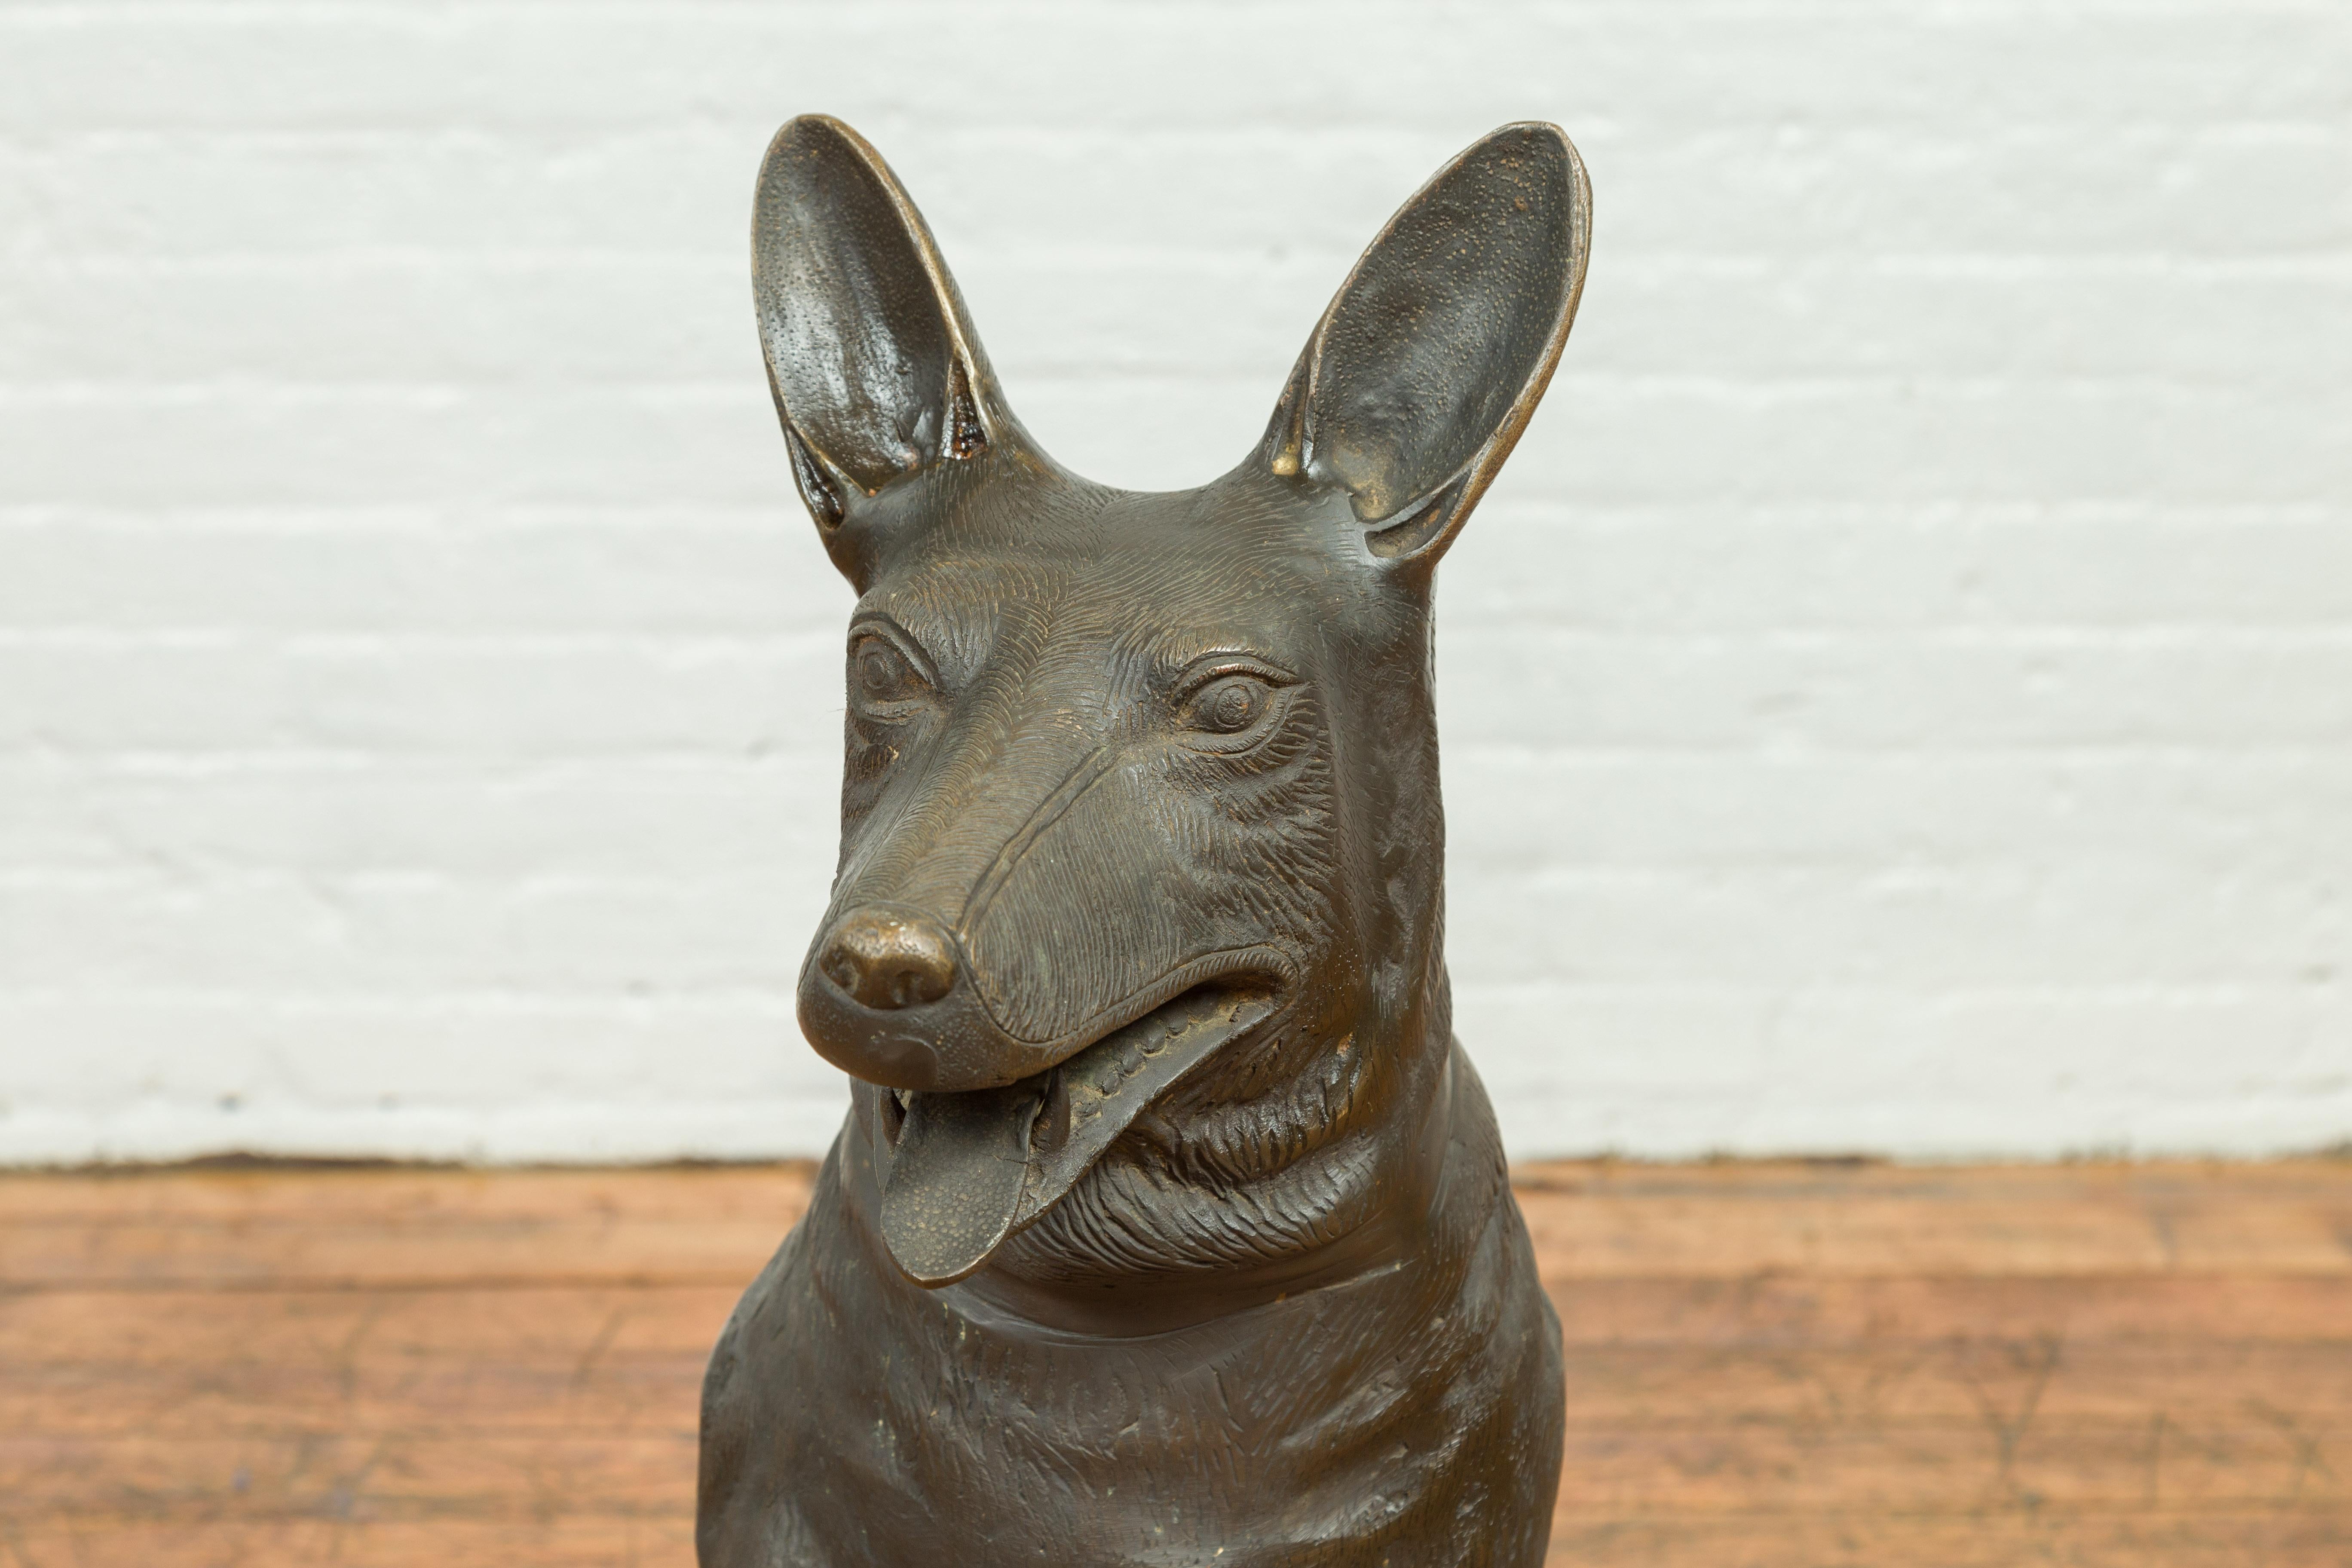 Cast Contemporary Bronze Sculpture Depicting a German Shepherd with Dark Patina